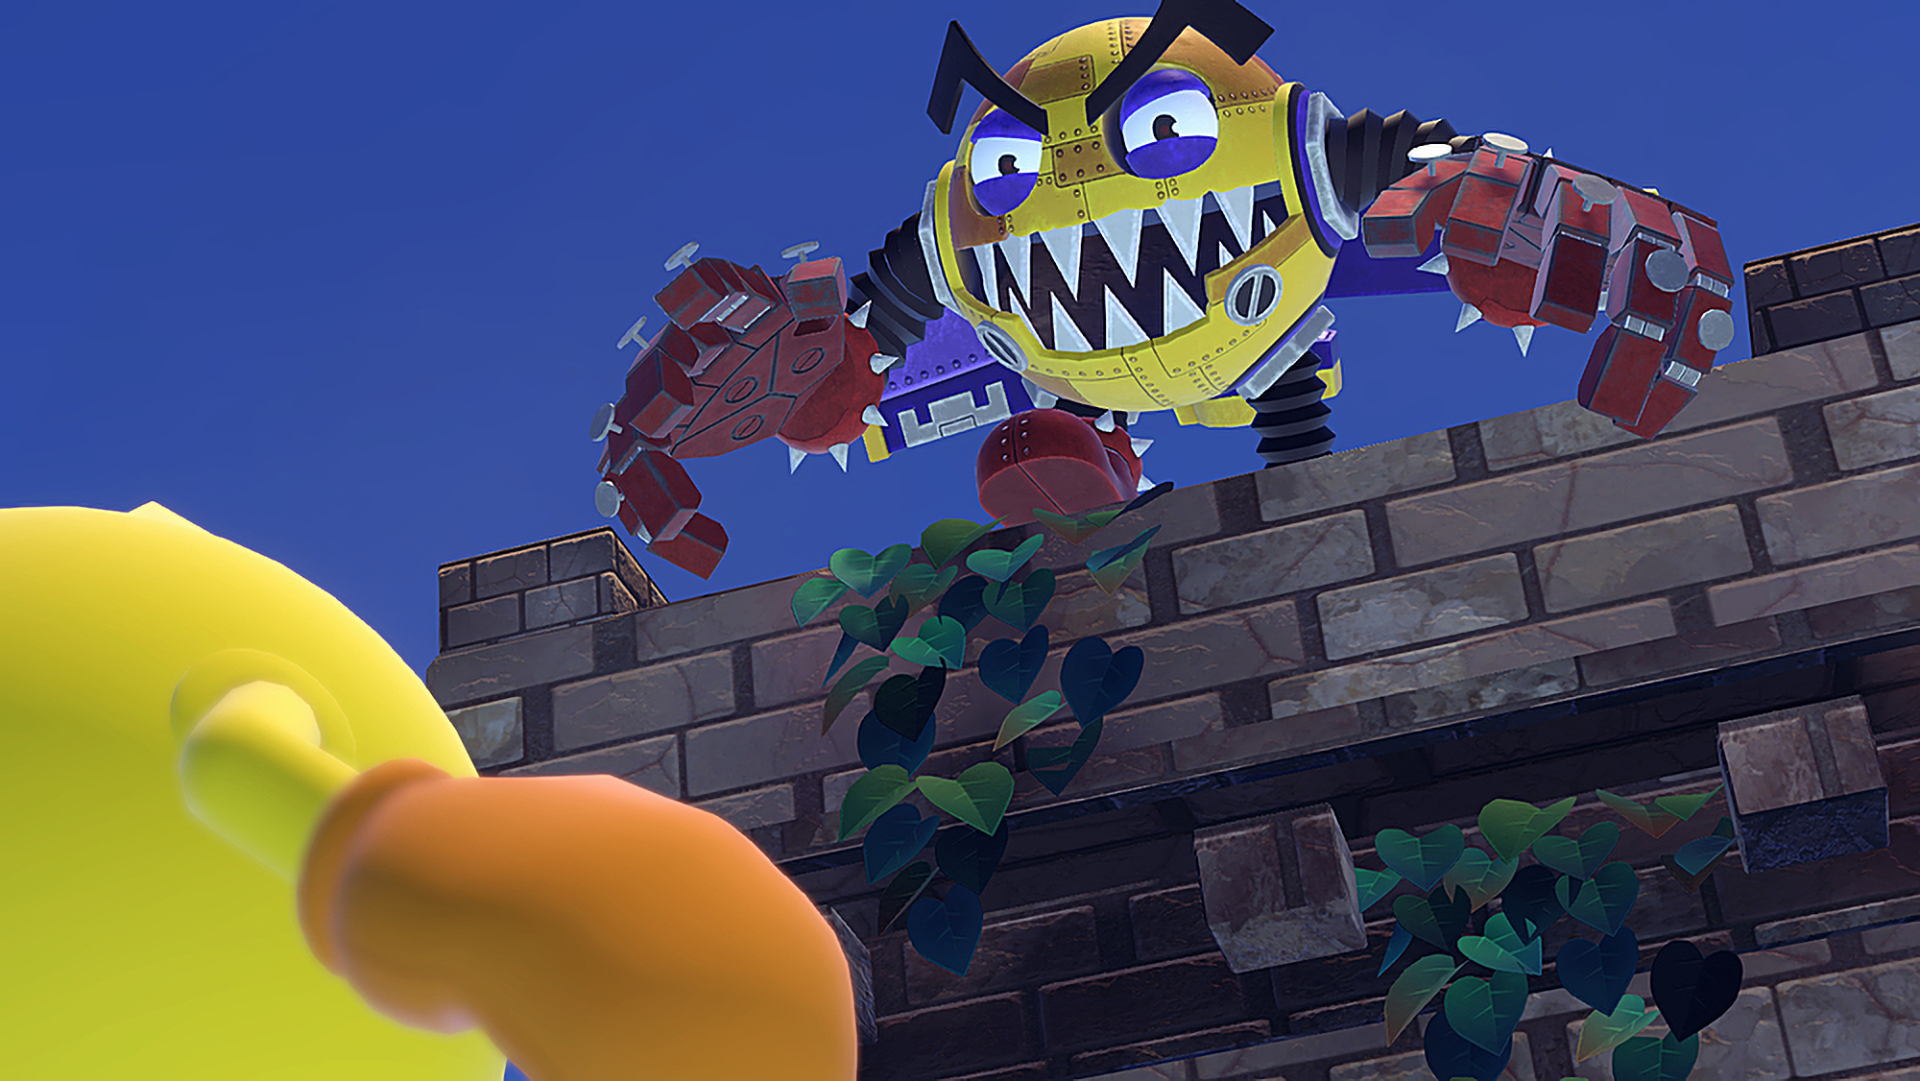 Jogo Pac-Man World Re-Pac para PS5
